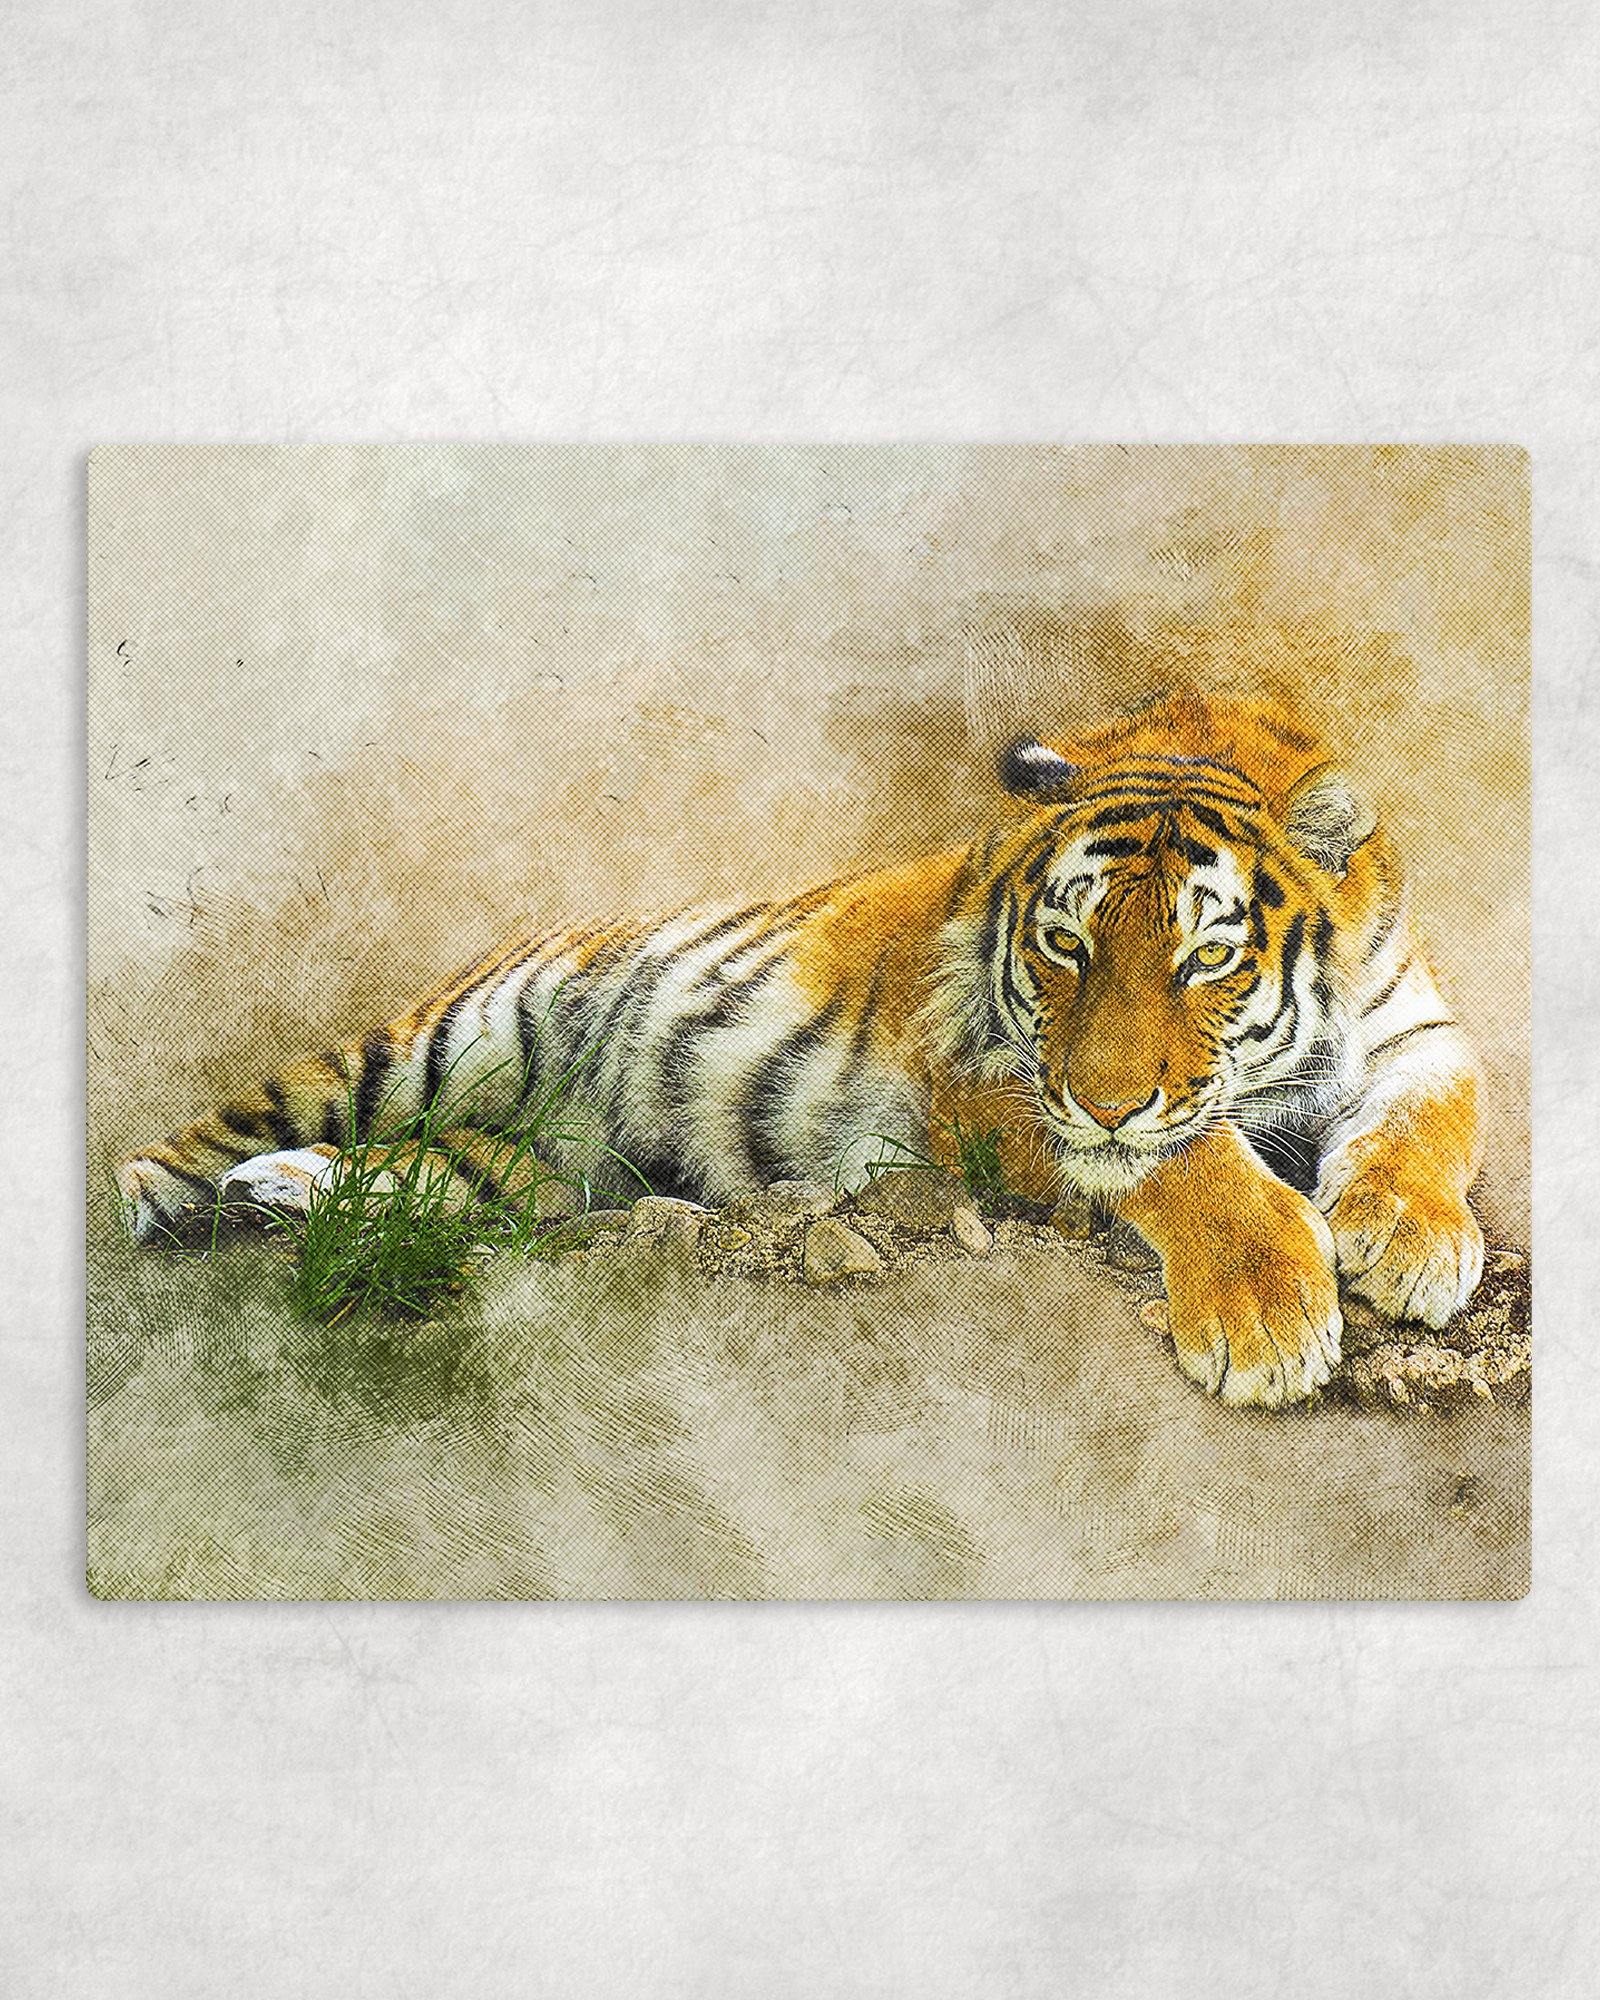 Tiger Metal Photo Panel - 8x10 - Schoppix Gifts